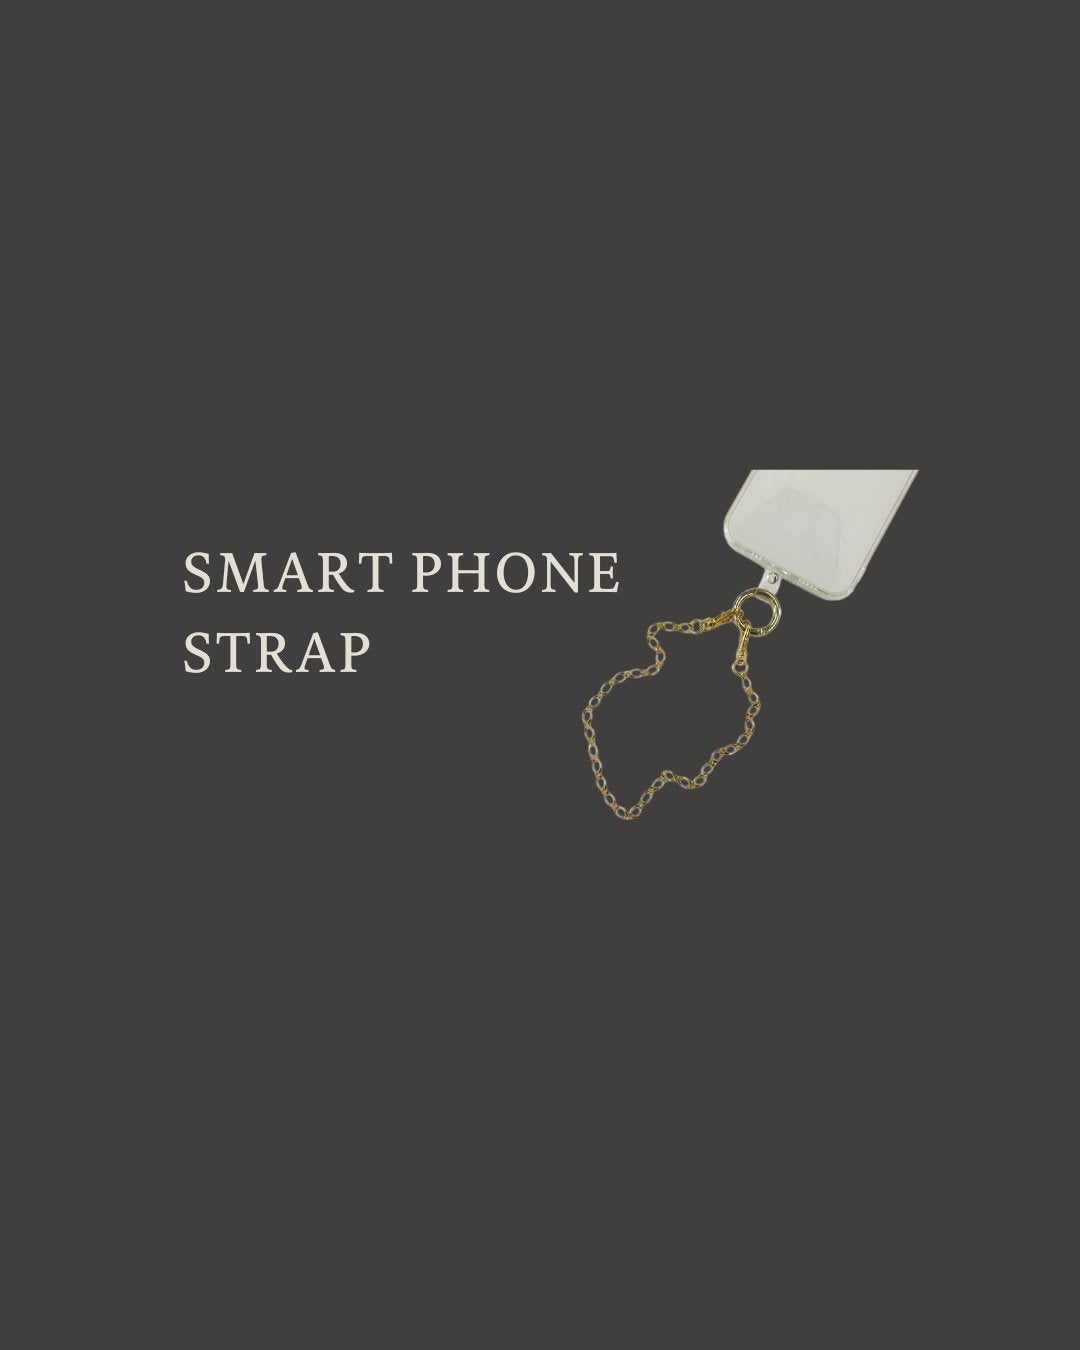 SMARTPHONE STRAP